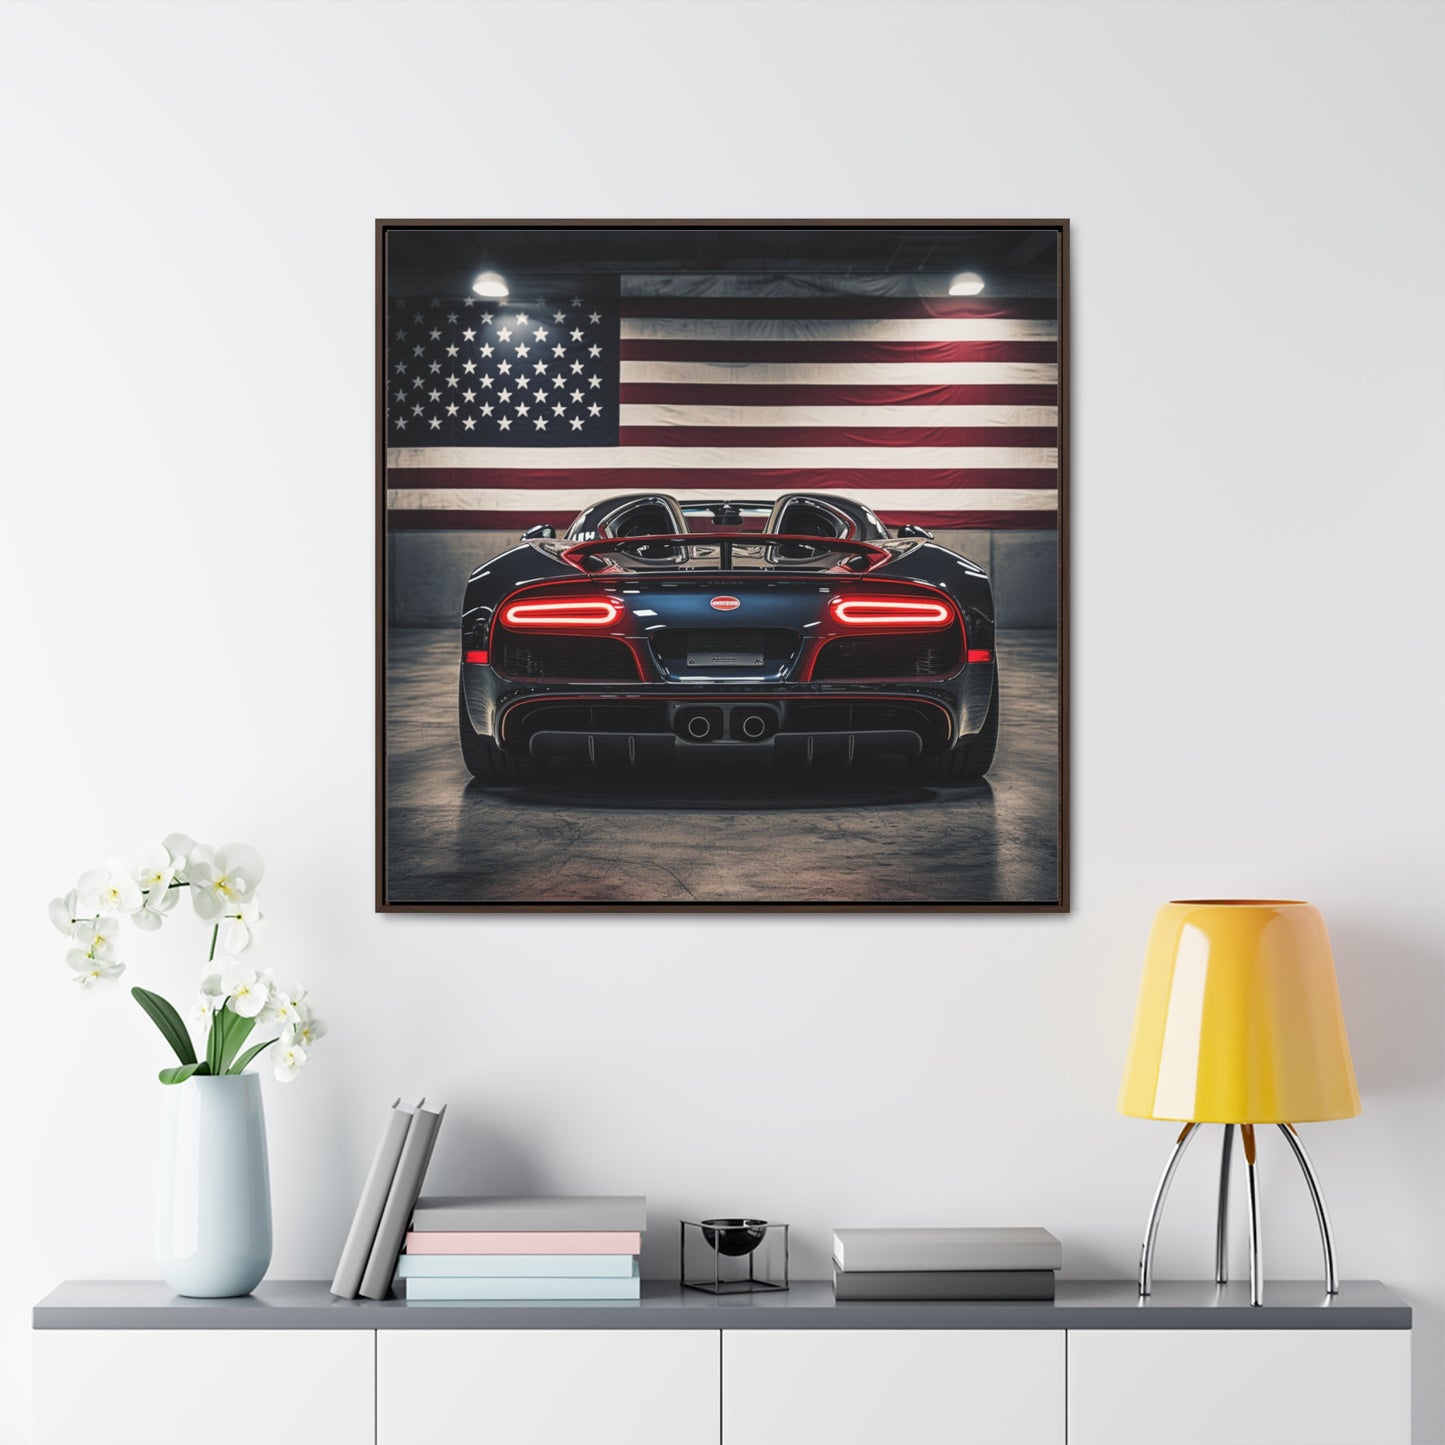 Gallery Canvas Wraps, Square Frame American Flag Background Bugatti 4